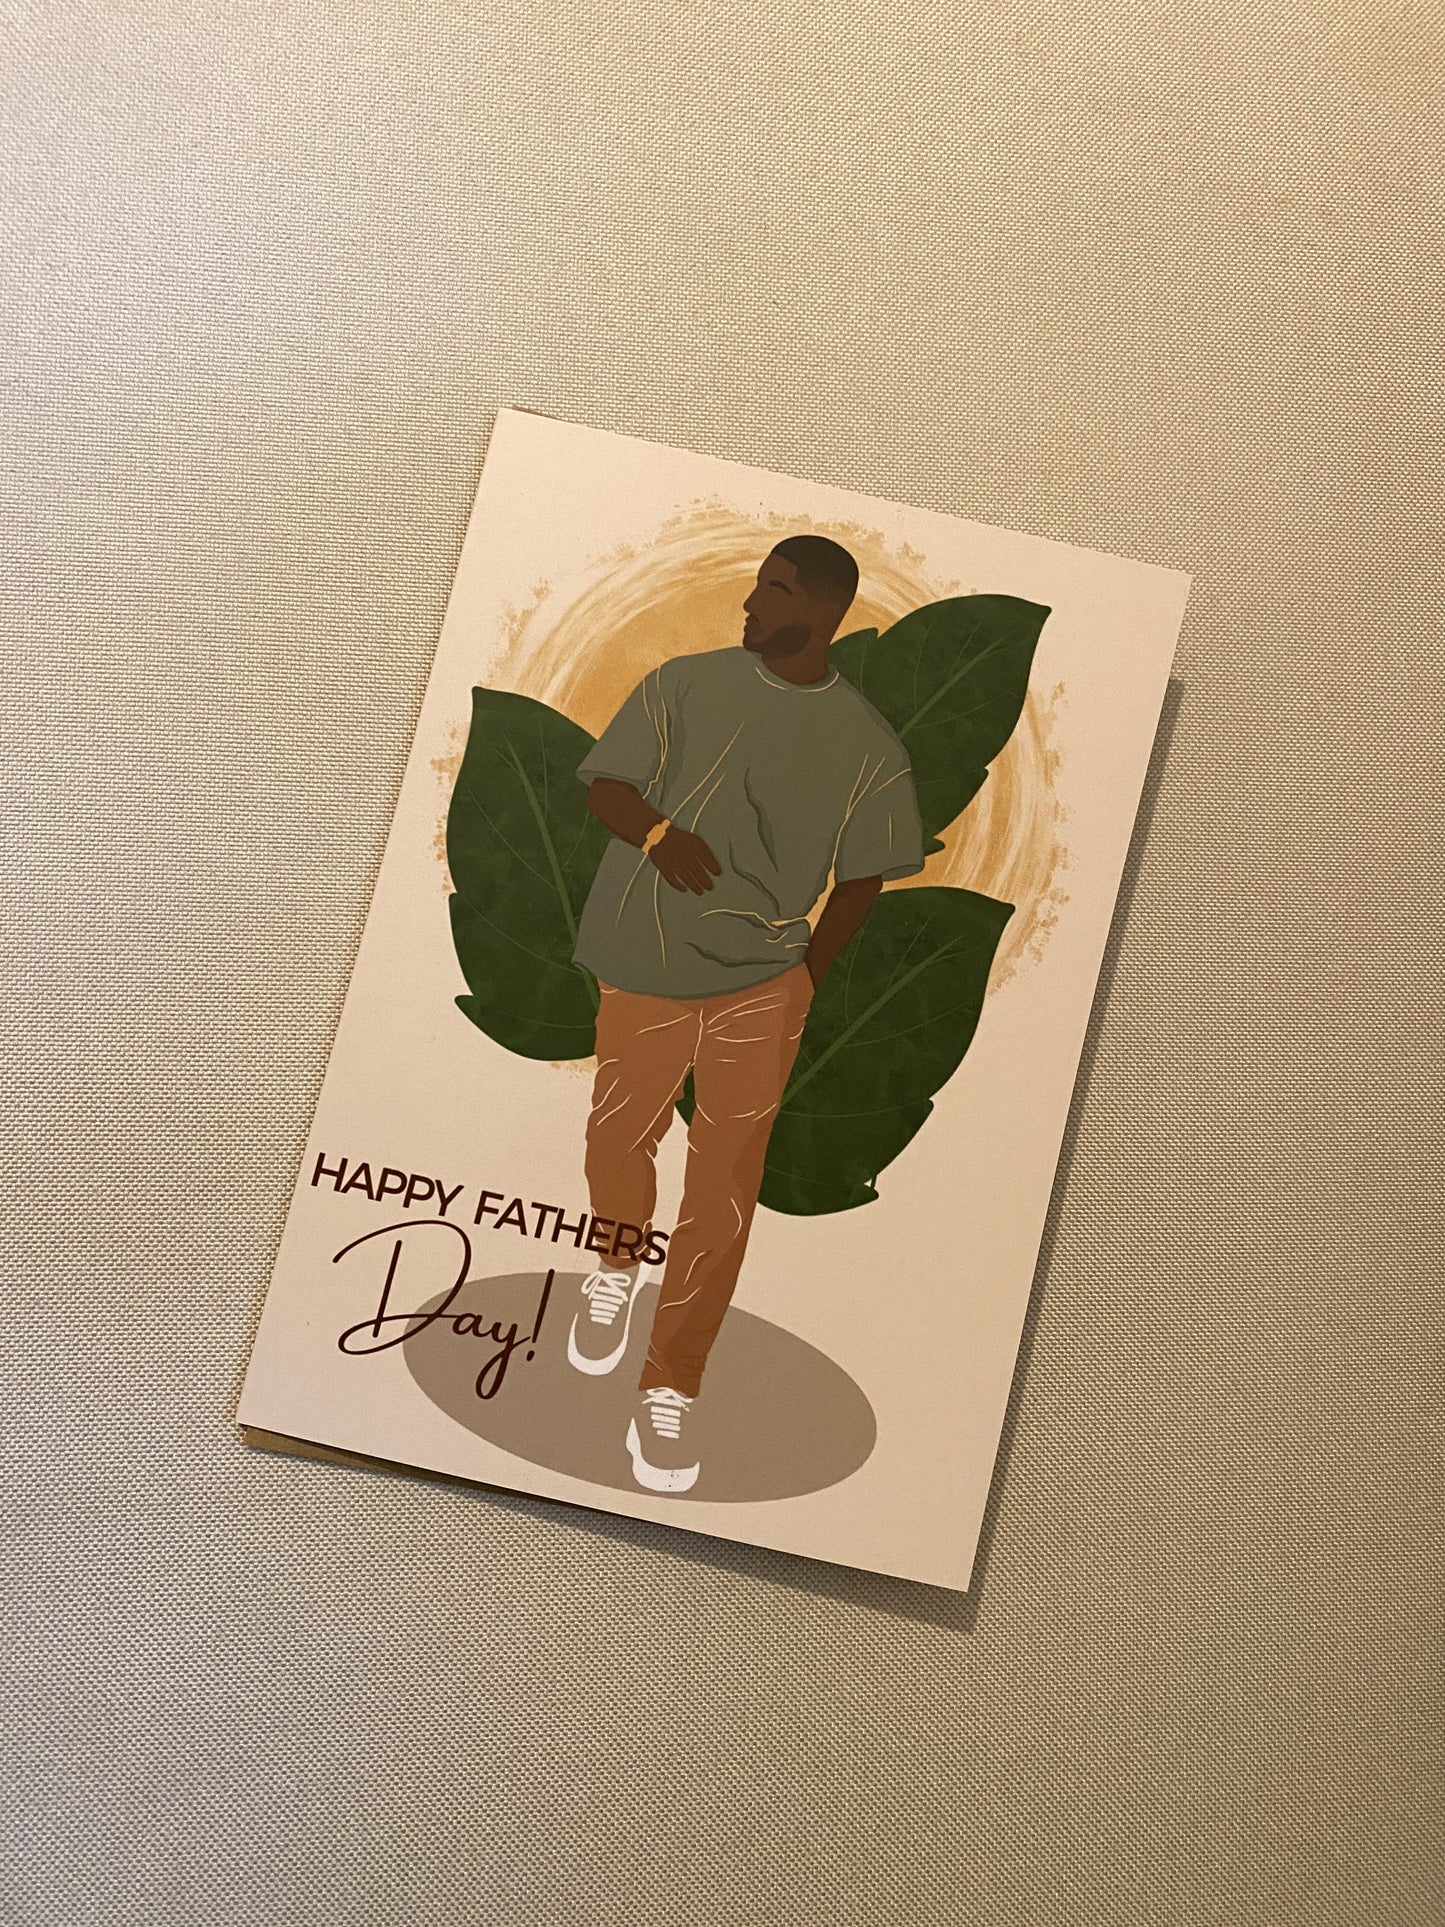 Dapper Dad Fathers Day Card.